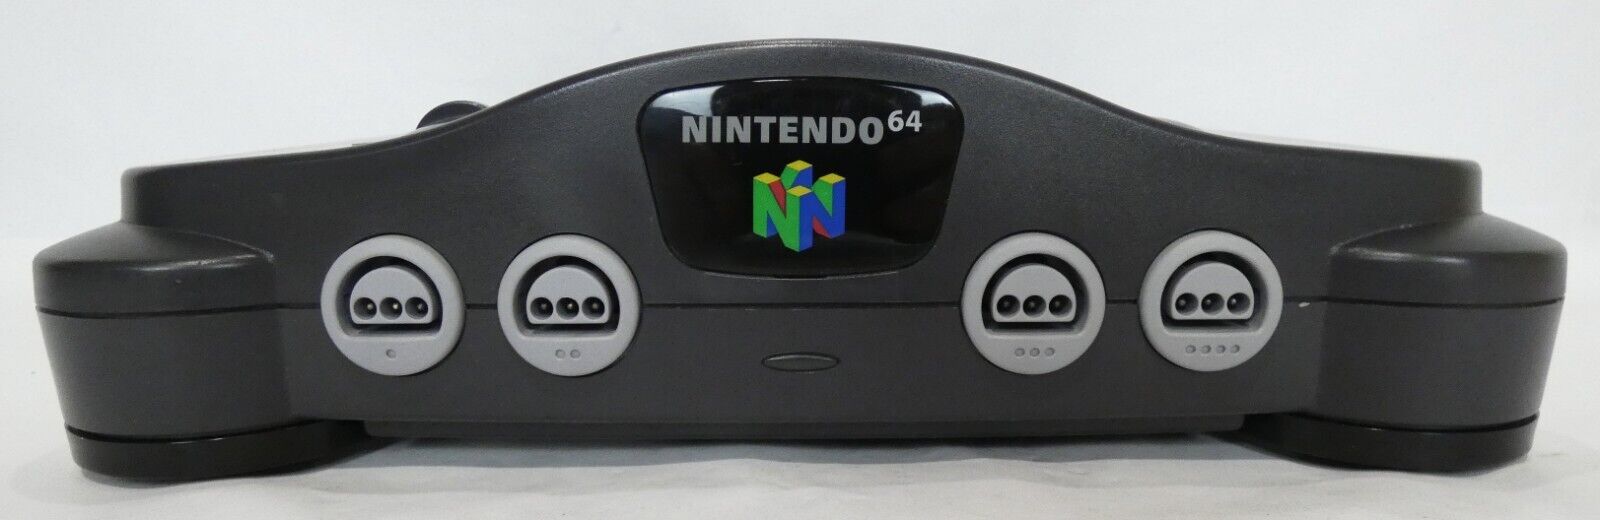 Nintendo 64 HDMI Mod mit Digital 64HD & Deblur Feature N64 PAL Version Gamebox